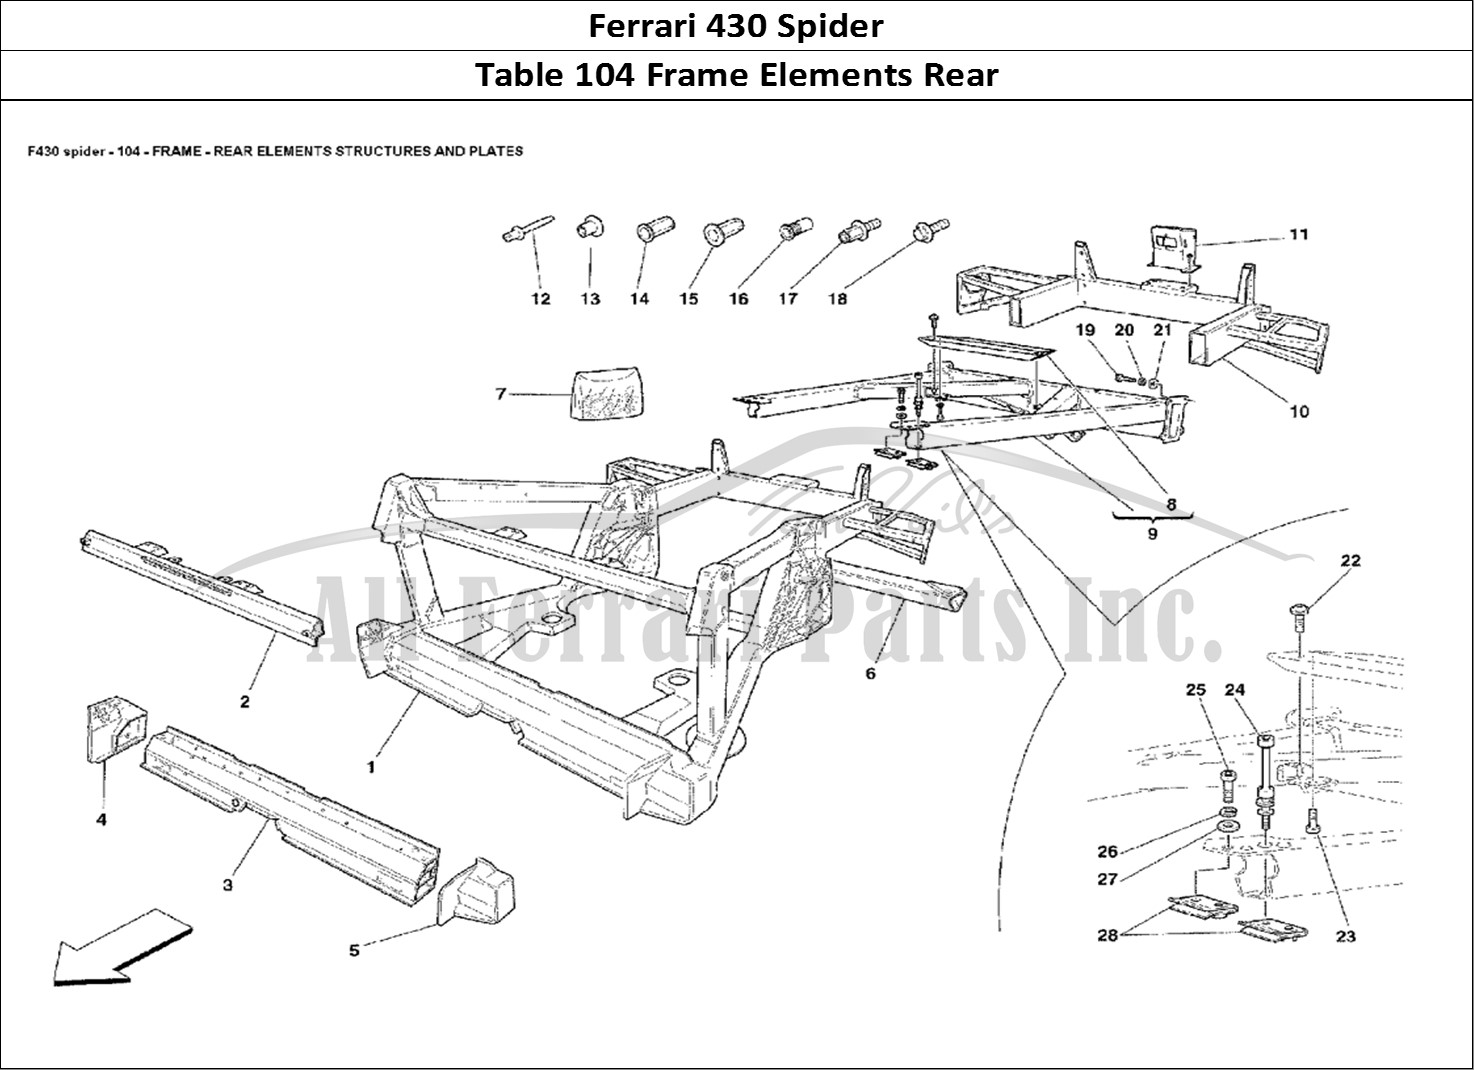 Ferrari Parts Ferrari 430 Spider Page 104 Frame - Rear Elements Str